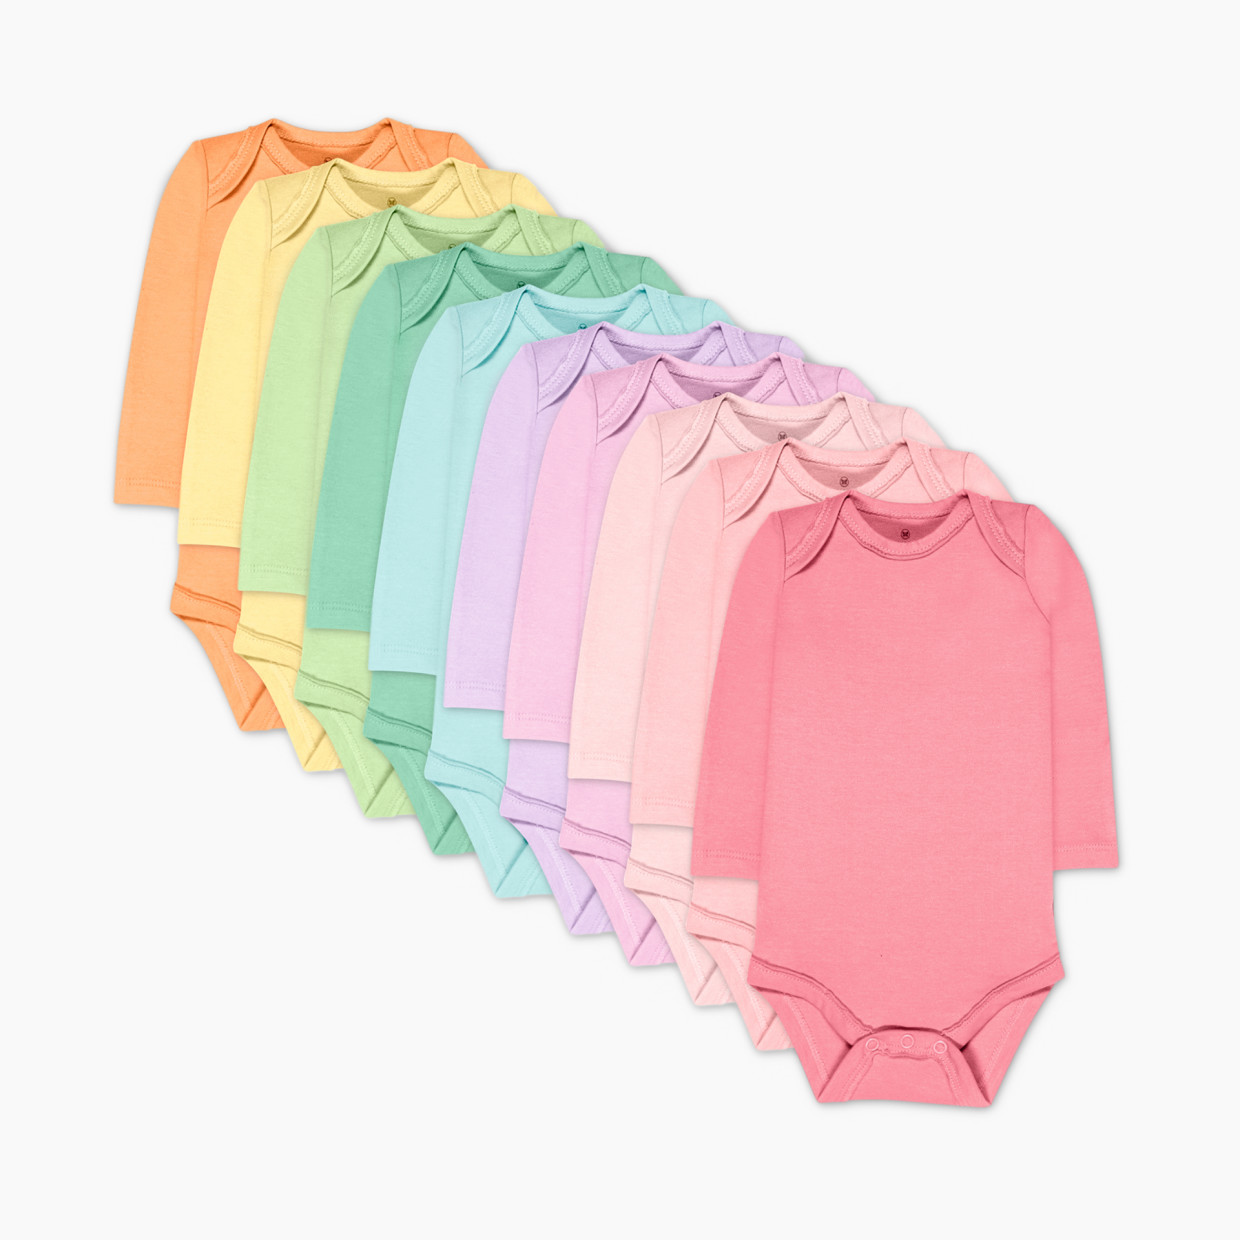 Honest Baby Clothing 10-Pack Organic Cotton Long Sleeve Bodysuits - Rainbow Pinks, 0-3 M, 10.